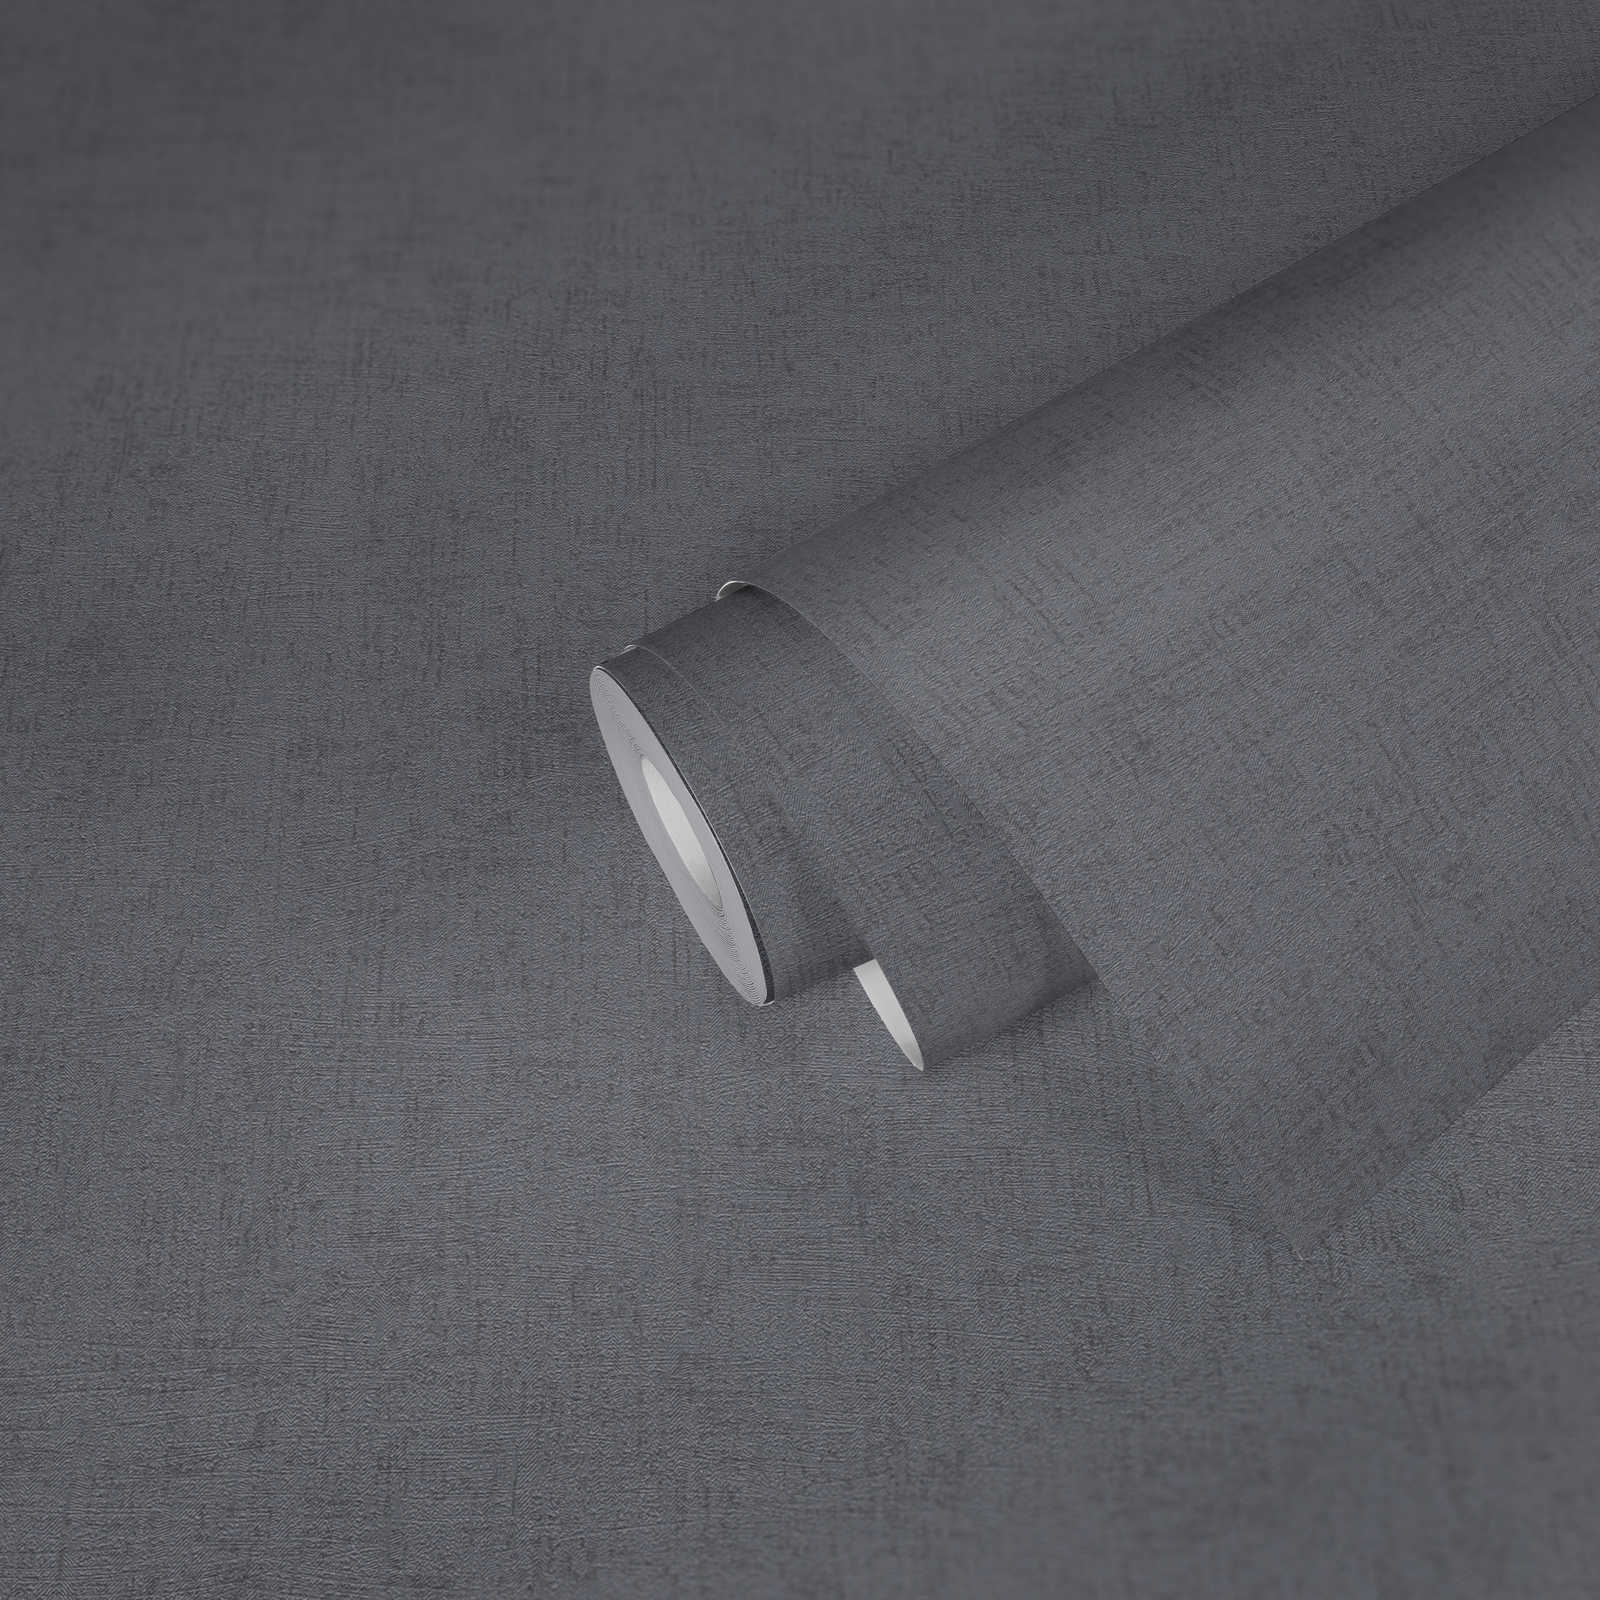             Uni Tapete Stahlgrau mit Strukturdesign & Glanz-Effekt – Grau, Metallic
        